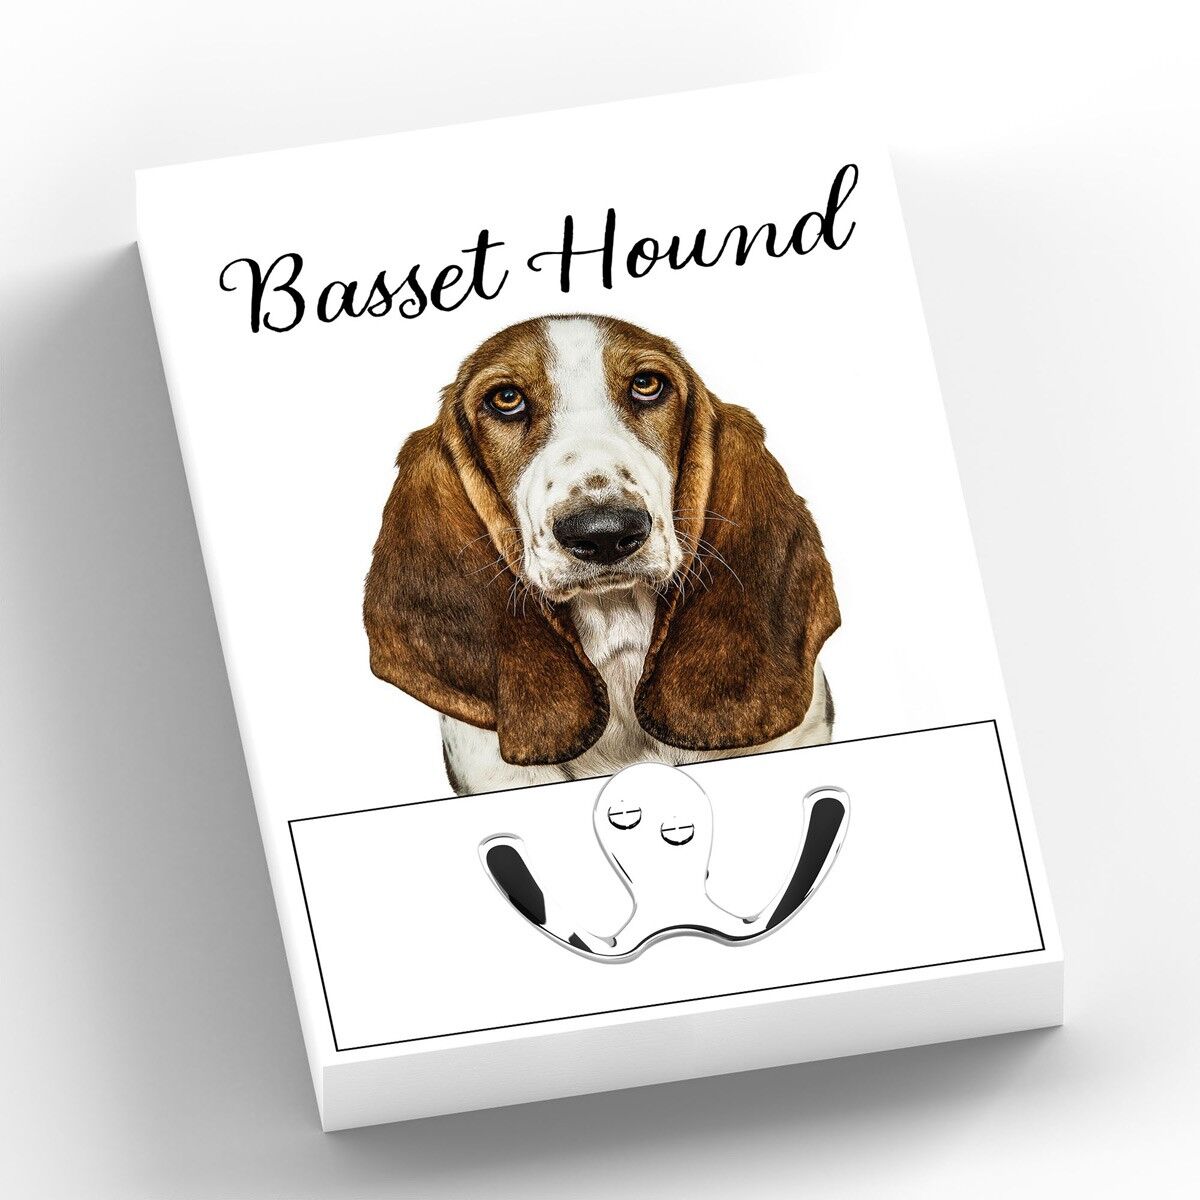 Buy wholesale P7007 - Bassett Hound Gruff Pawtraits Dog